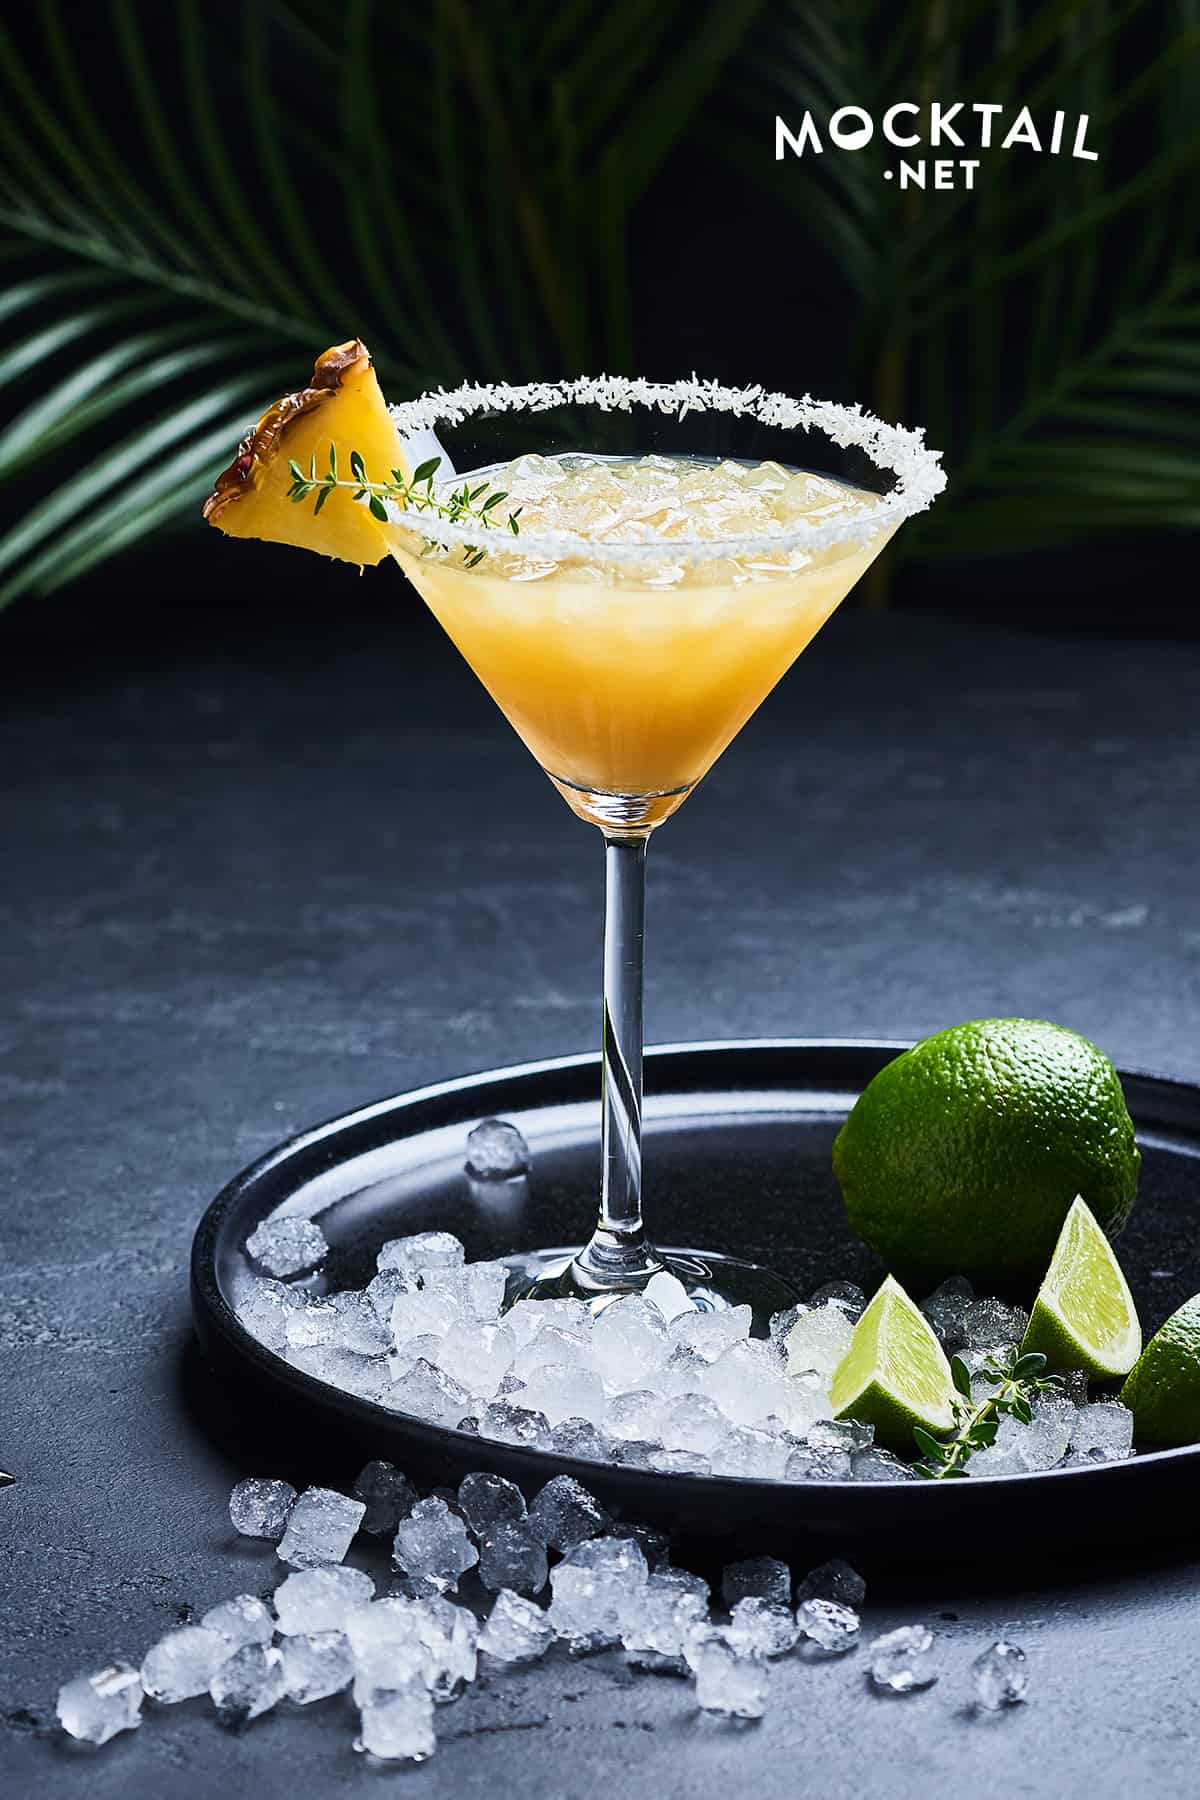 Ingredients in a Mocktail Margarita